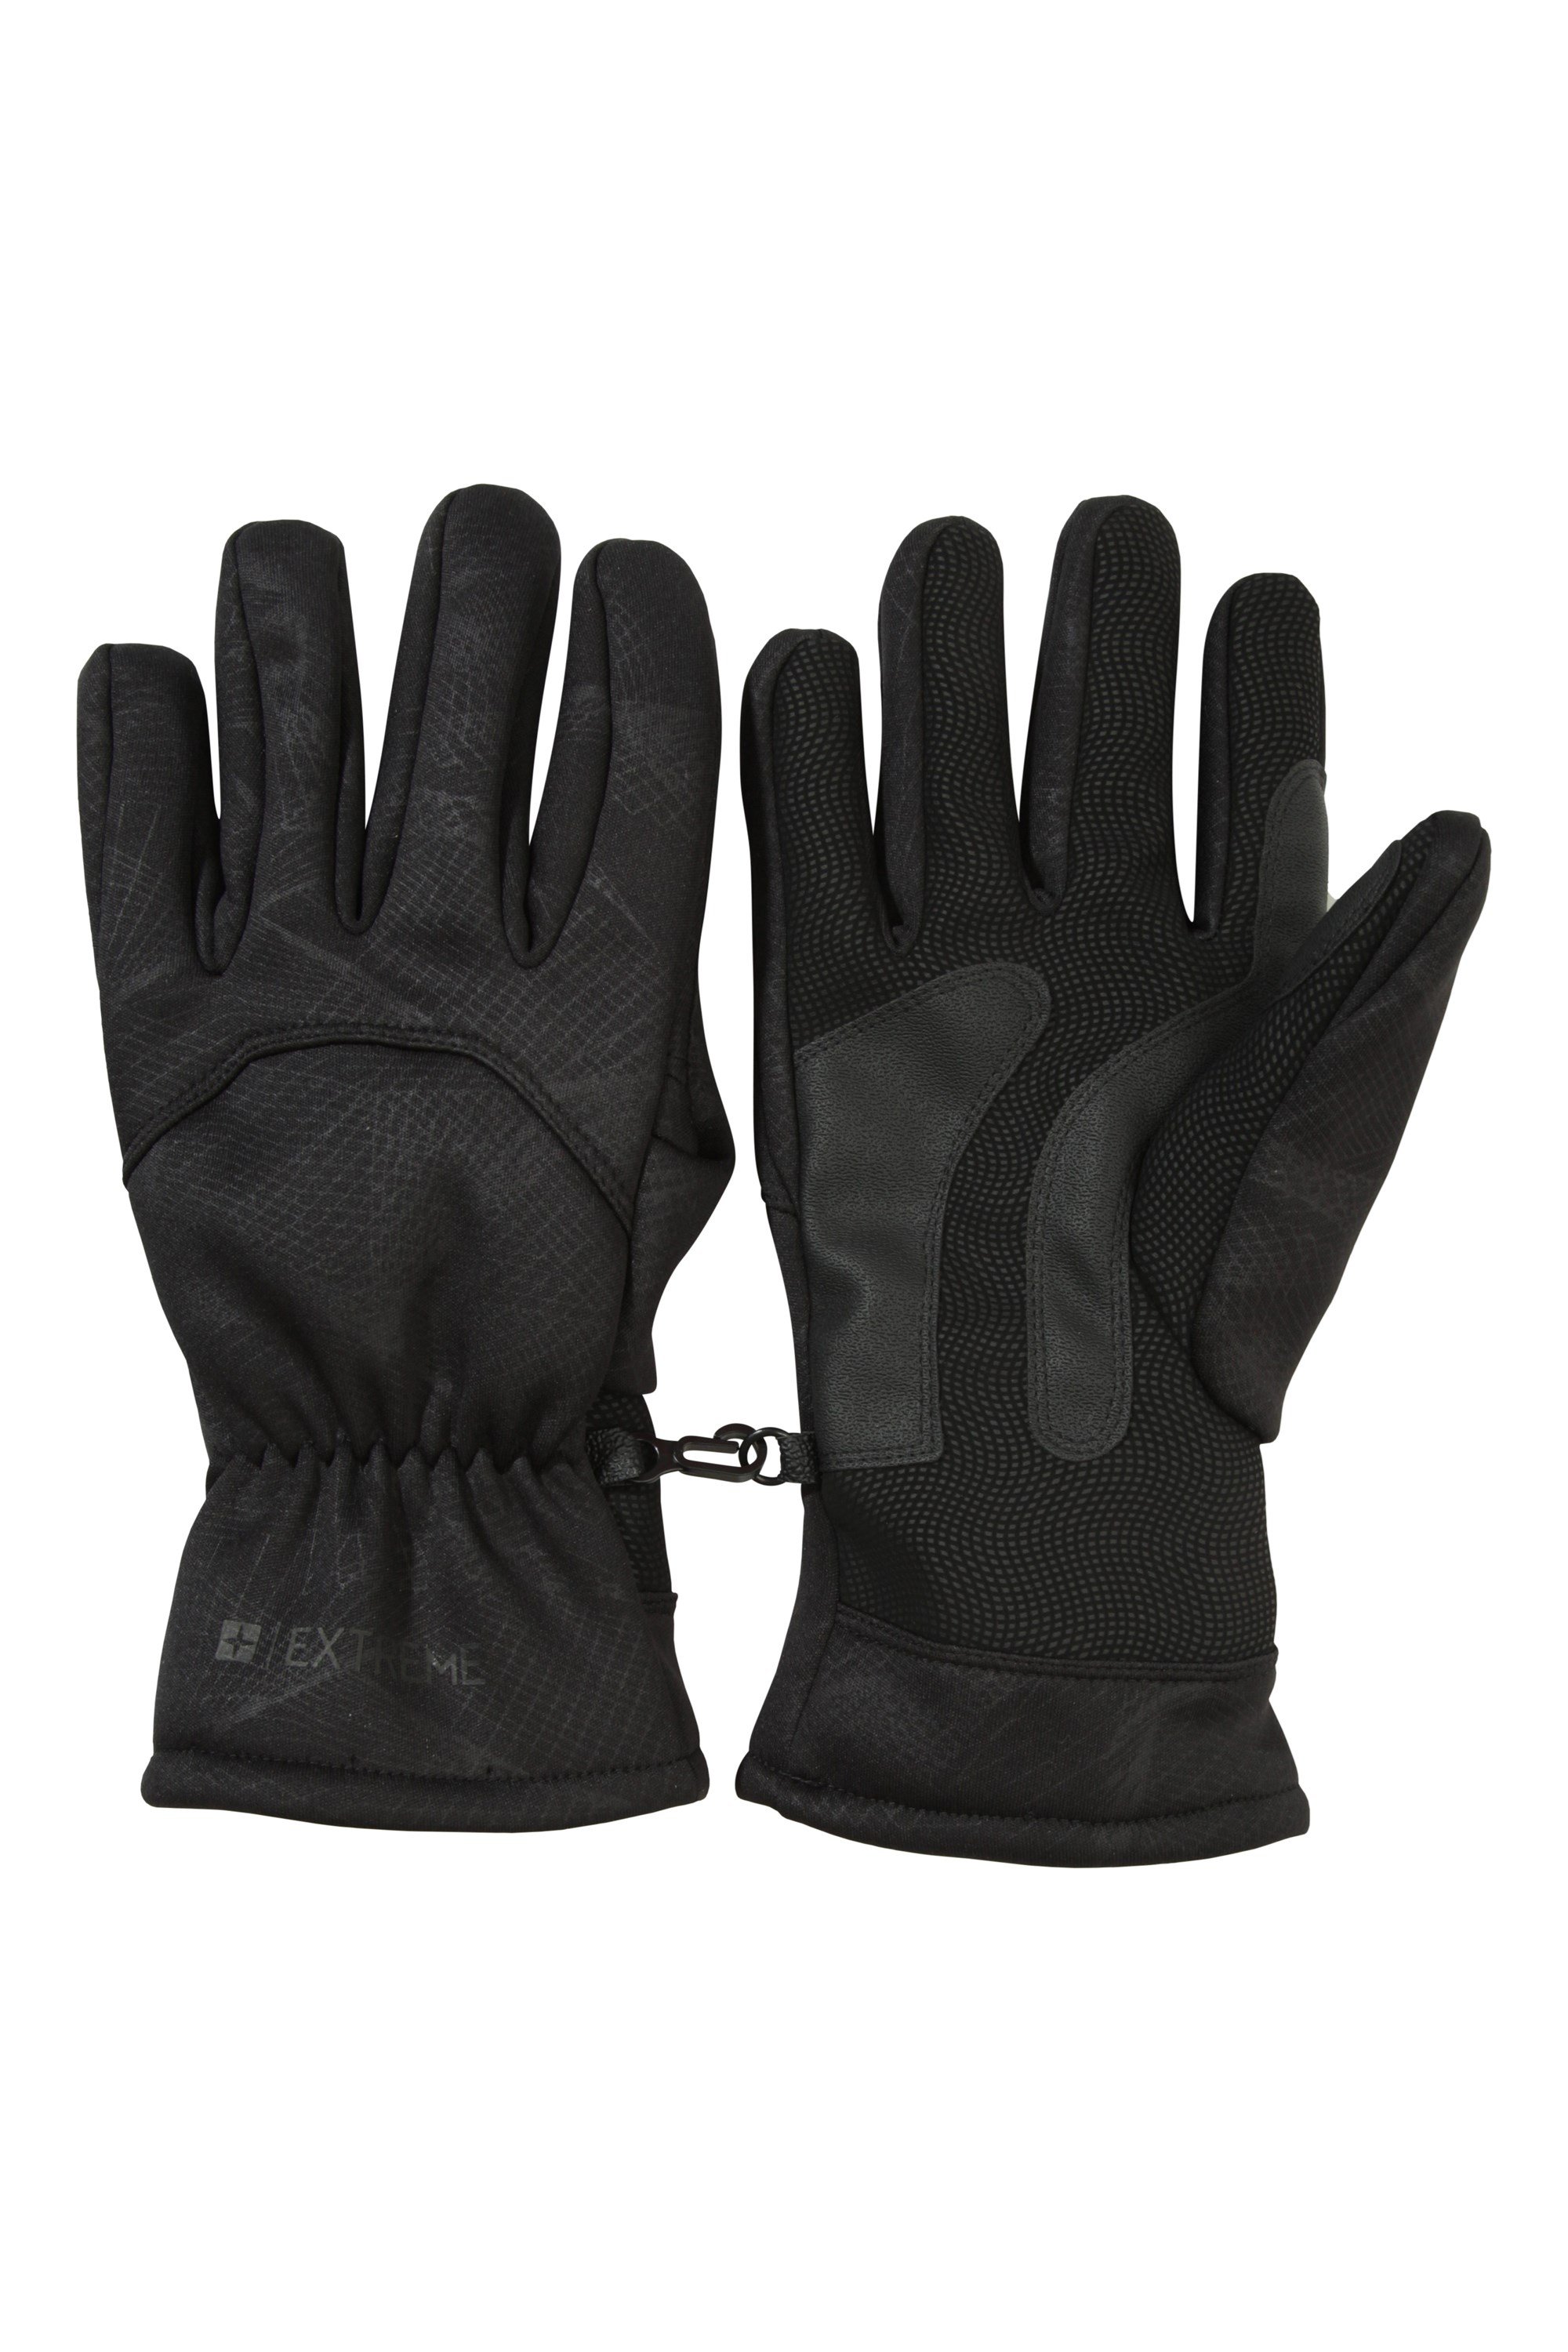 Mountain Warehouse Wms Chenille Womens Gloves 